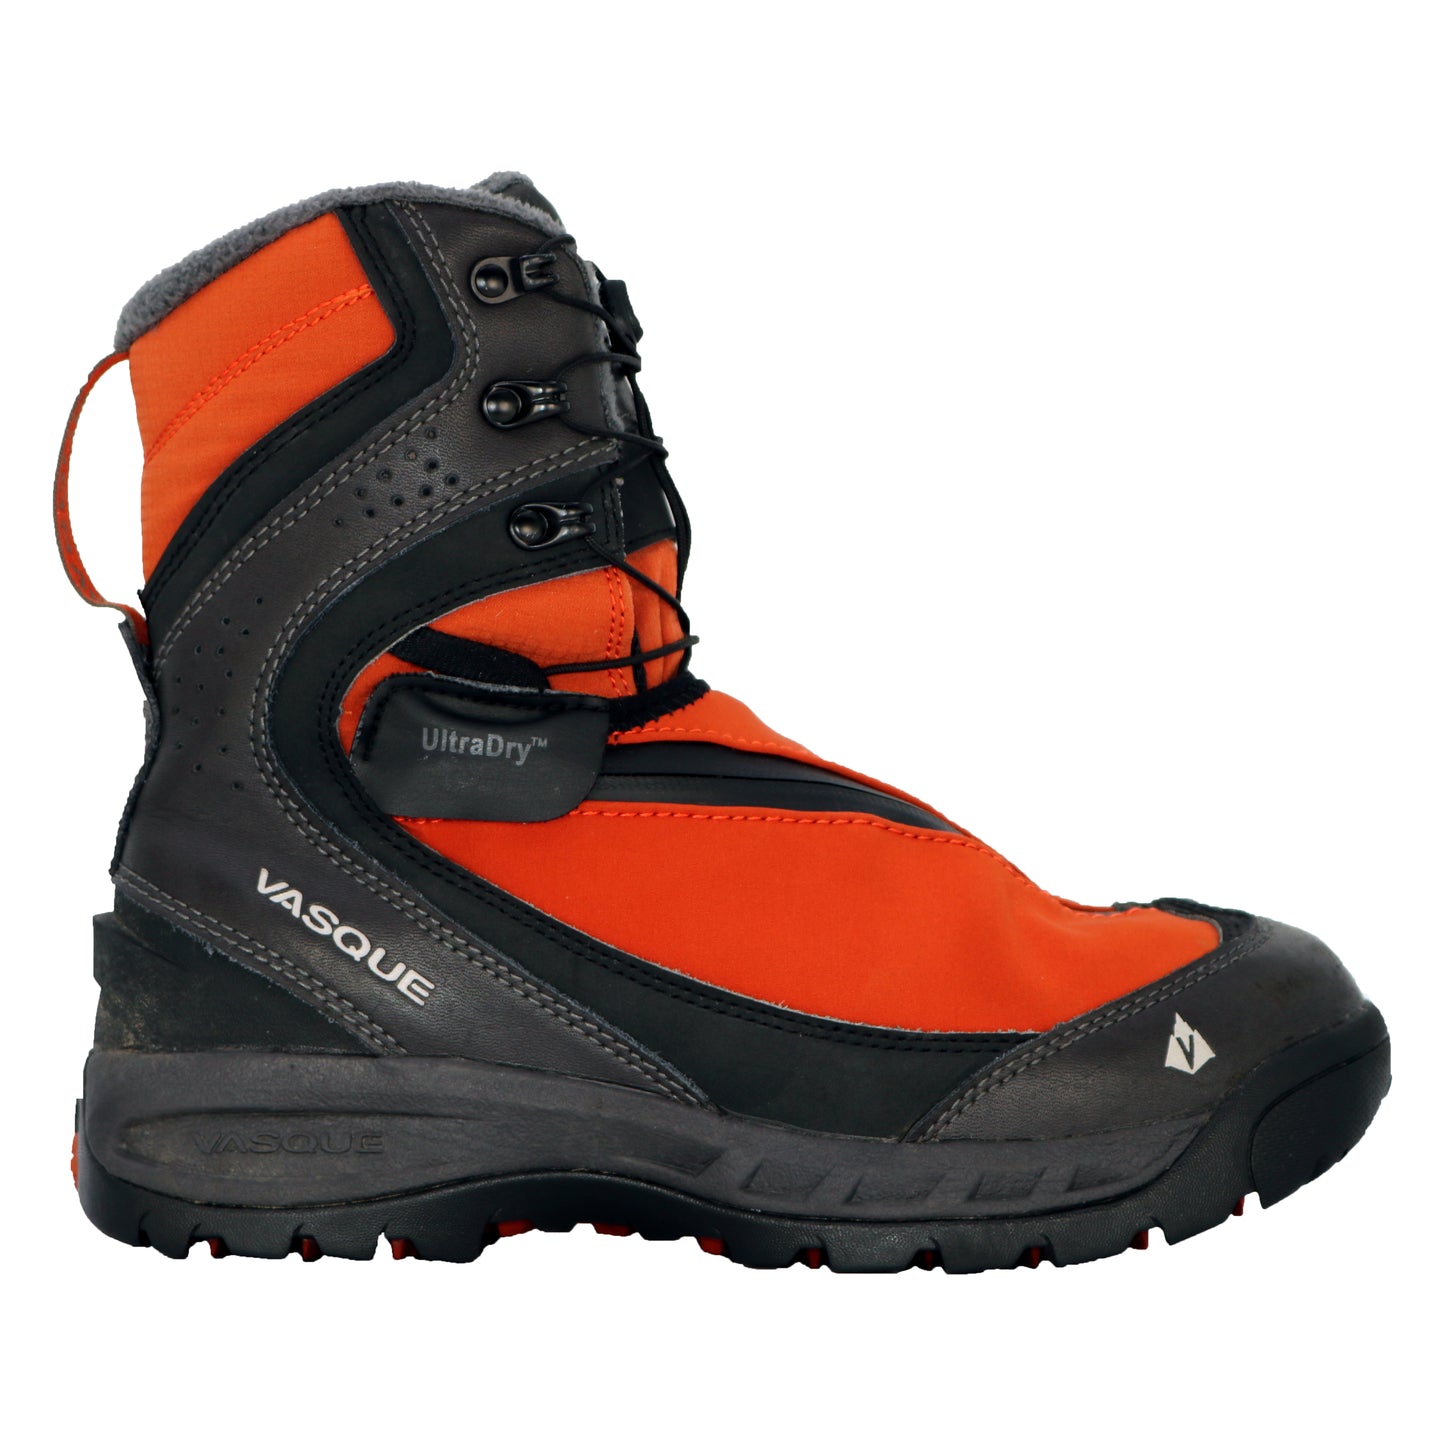 Vasque Arrowhead UltraDry Boots - Size 7.5 US